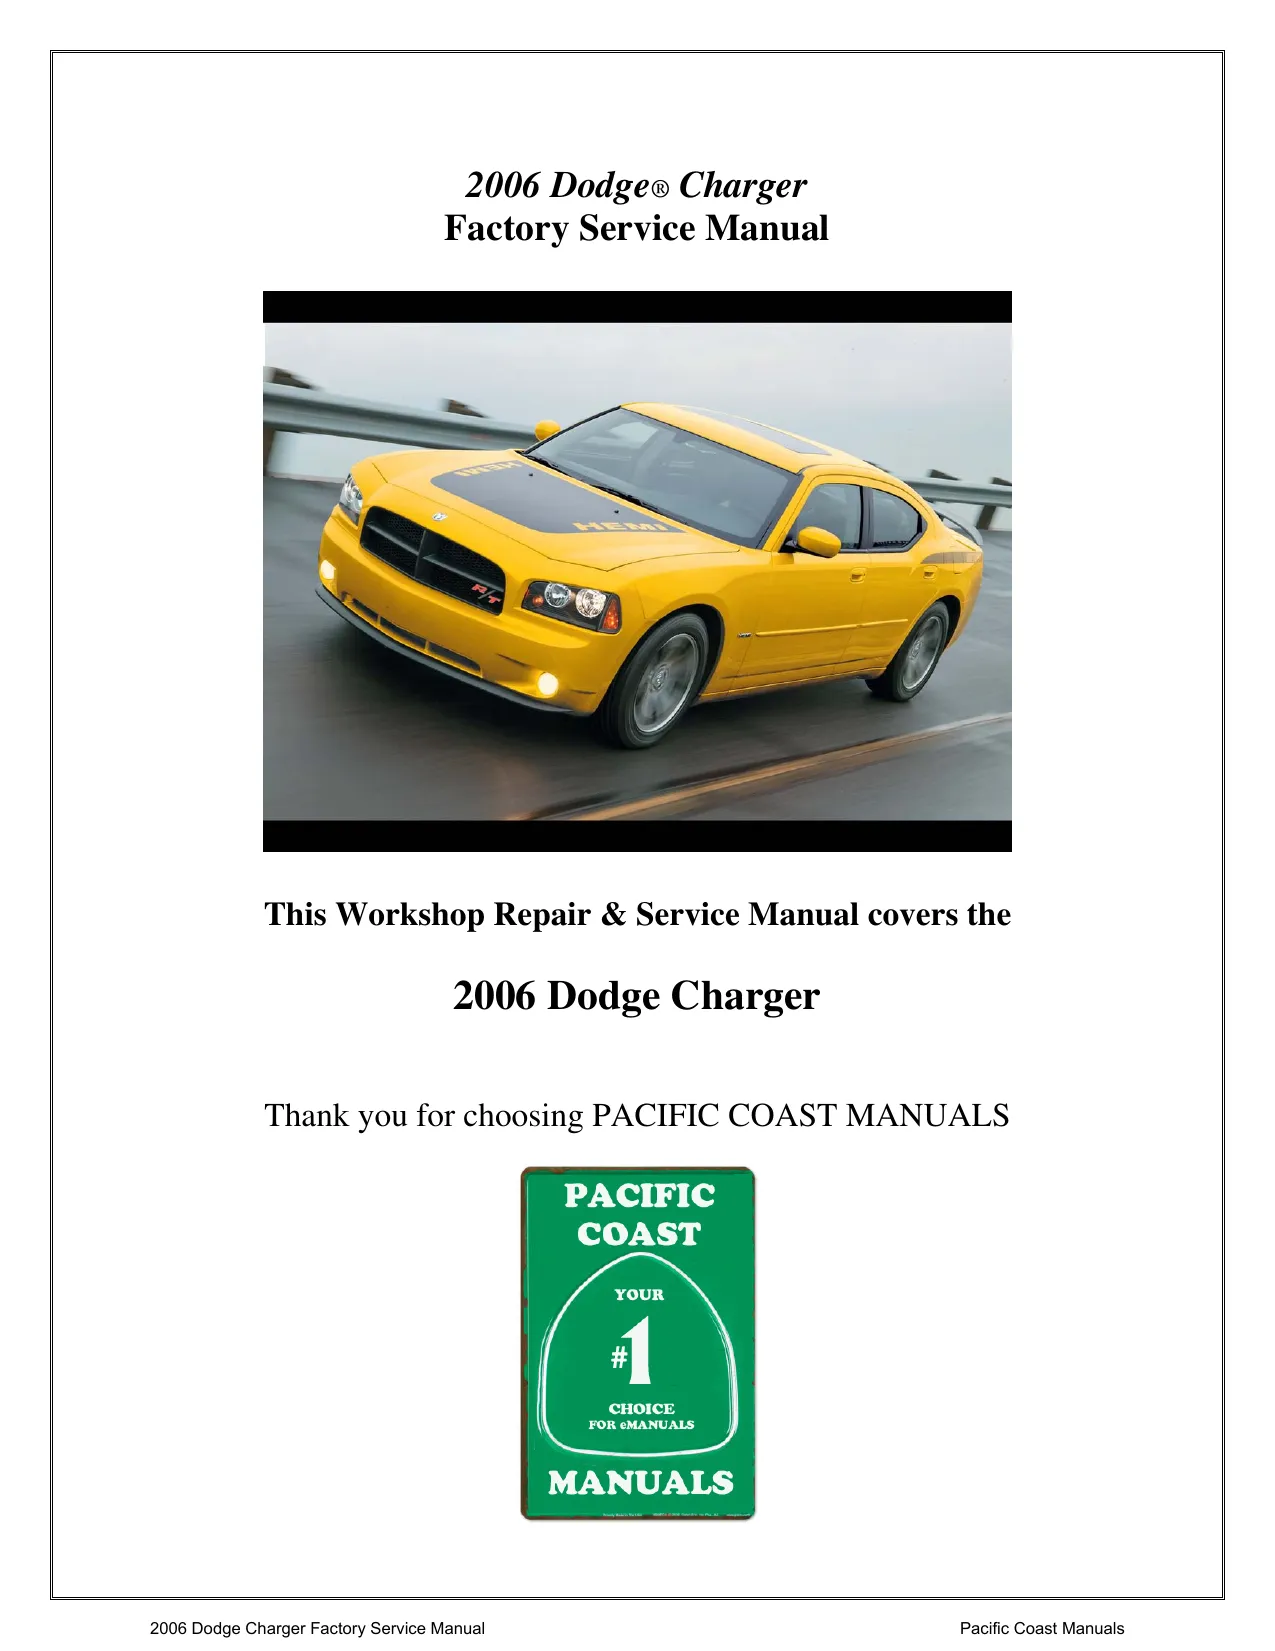 2006 Dodge Charger 300, 300C, SRT-8 series shop manual